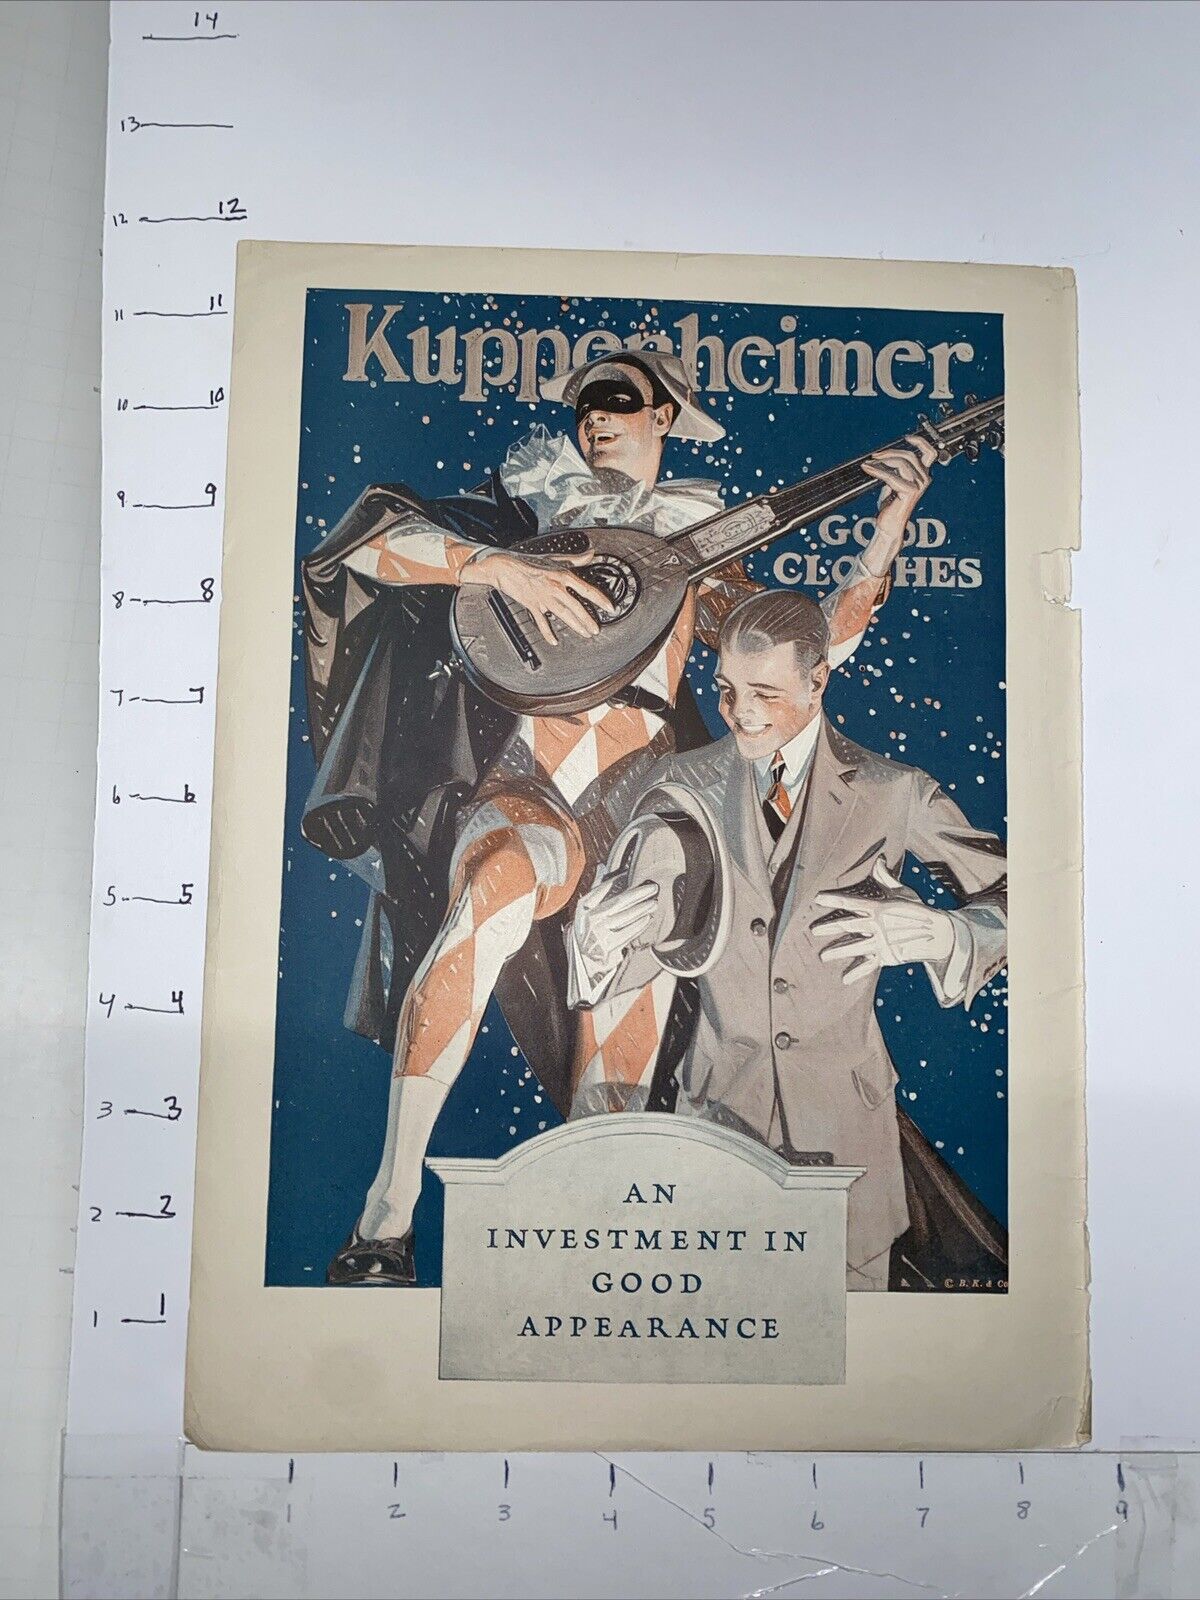 1922 KUPPENENHEIMER Clothing Vintage Print AD Openly Gay Illustrator Rare Find